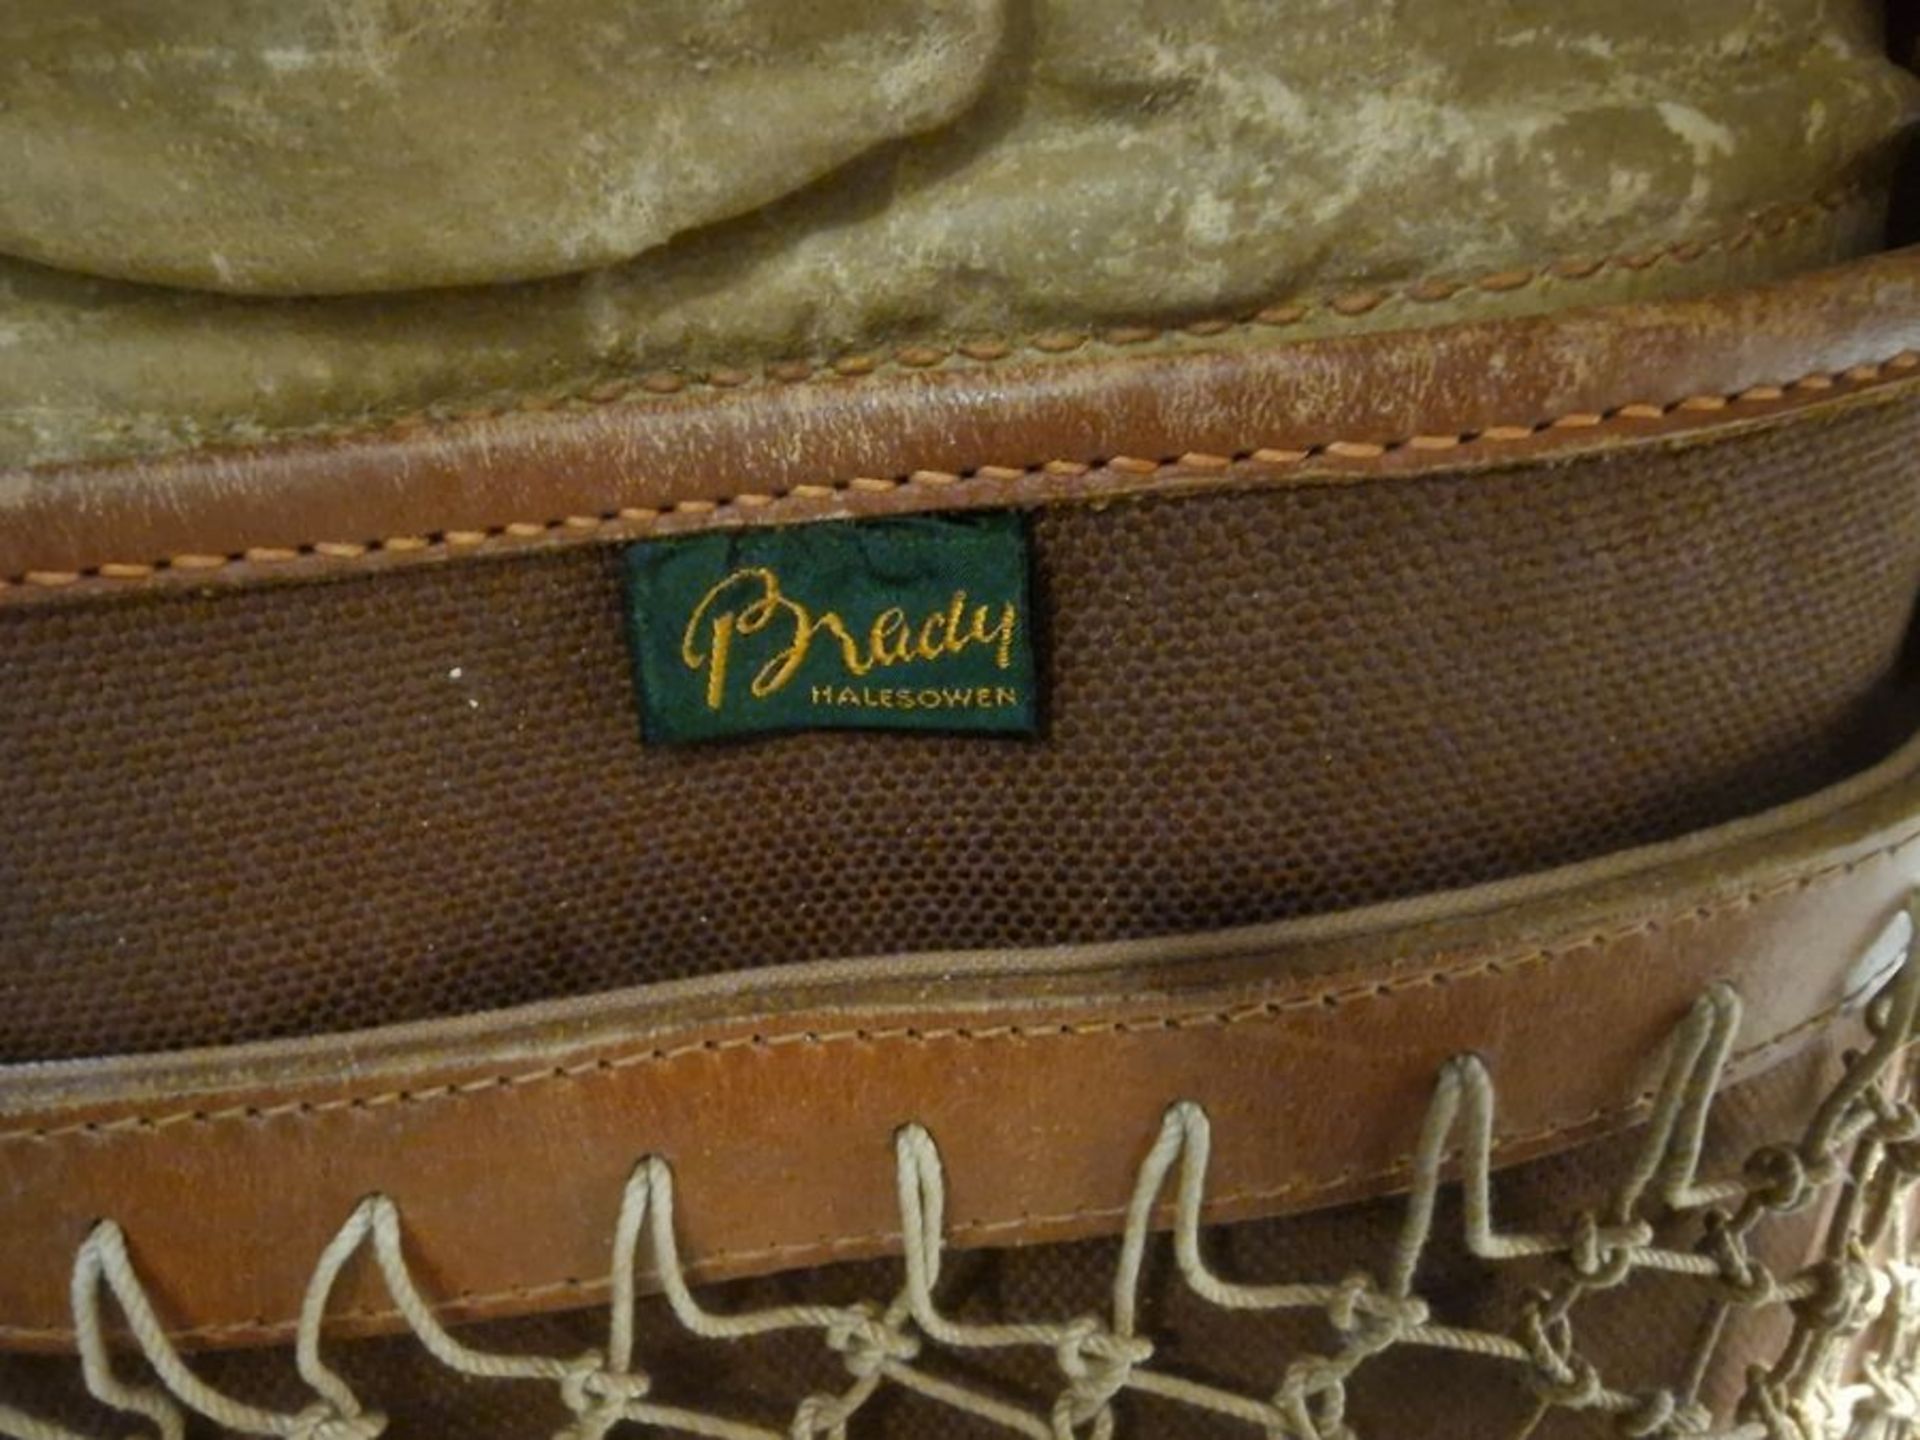 Brady canvas game bag, a shotgun cartridge belt and a vintage sheepskin coat (3) - Image 3 of 5